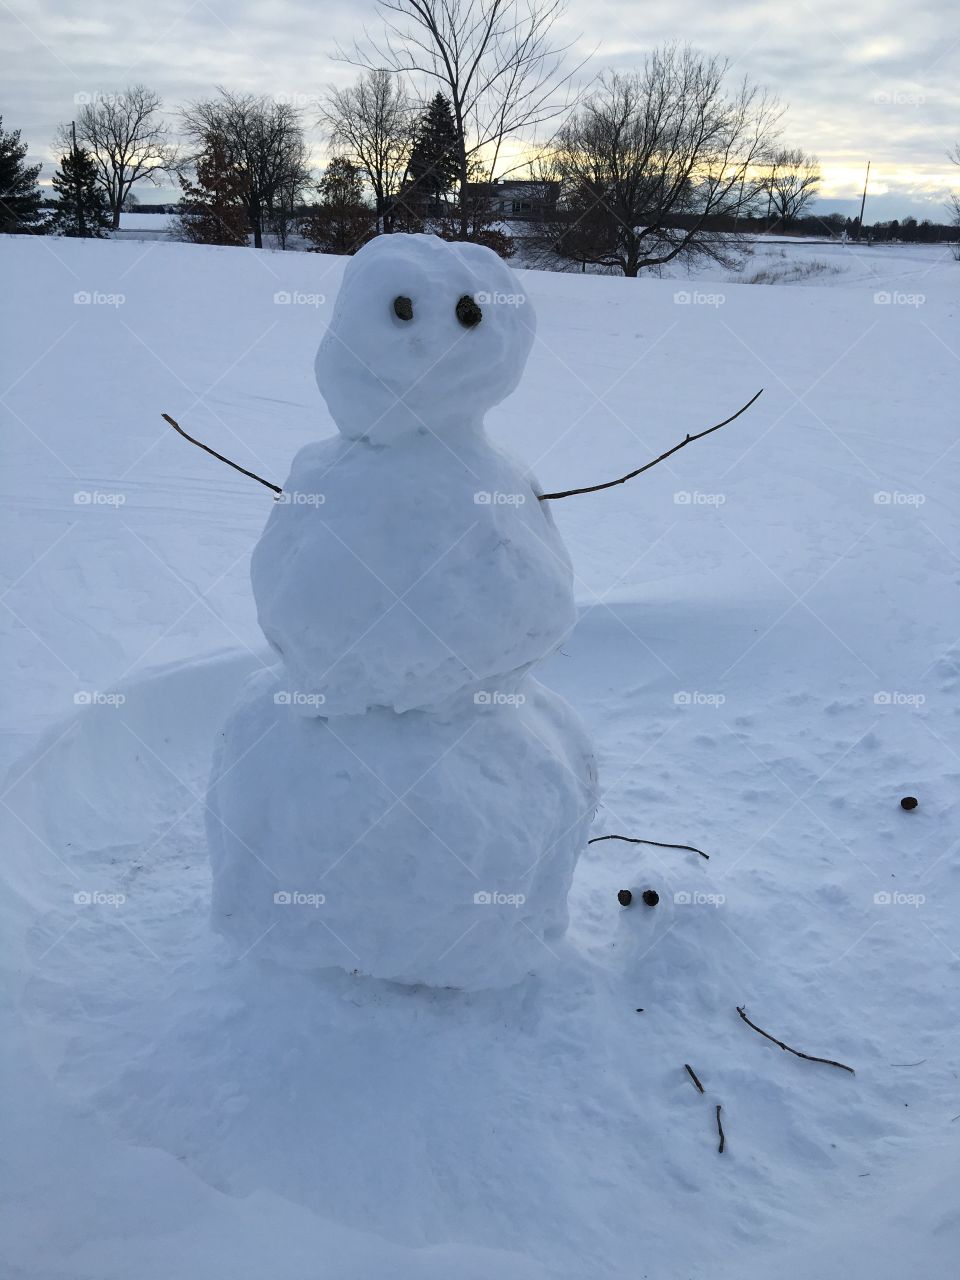 Snowman and snowdog